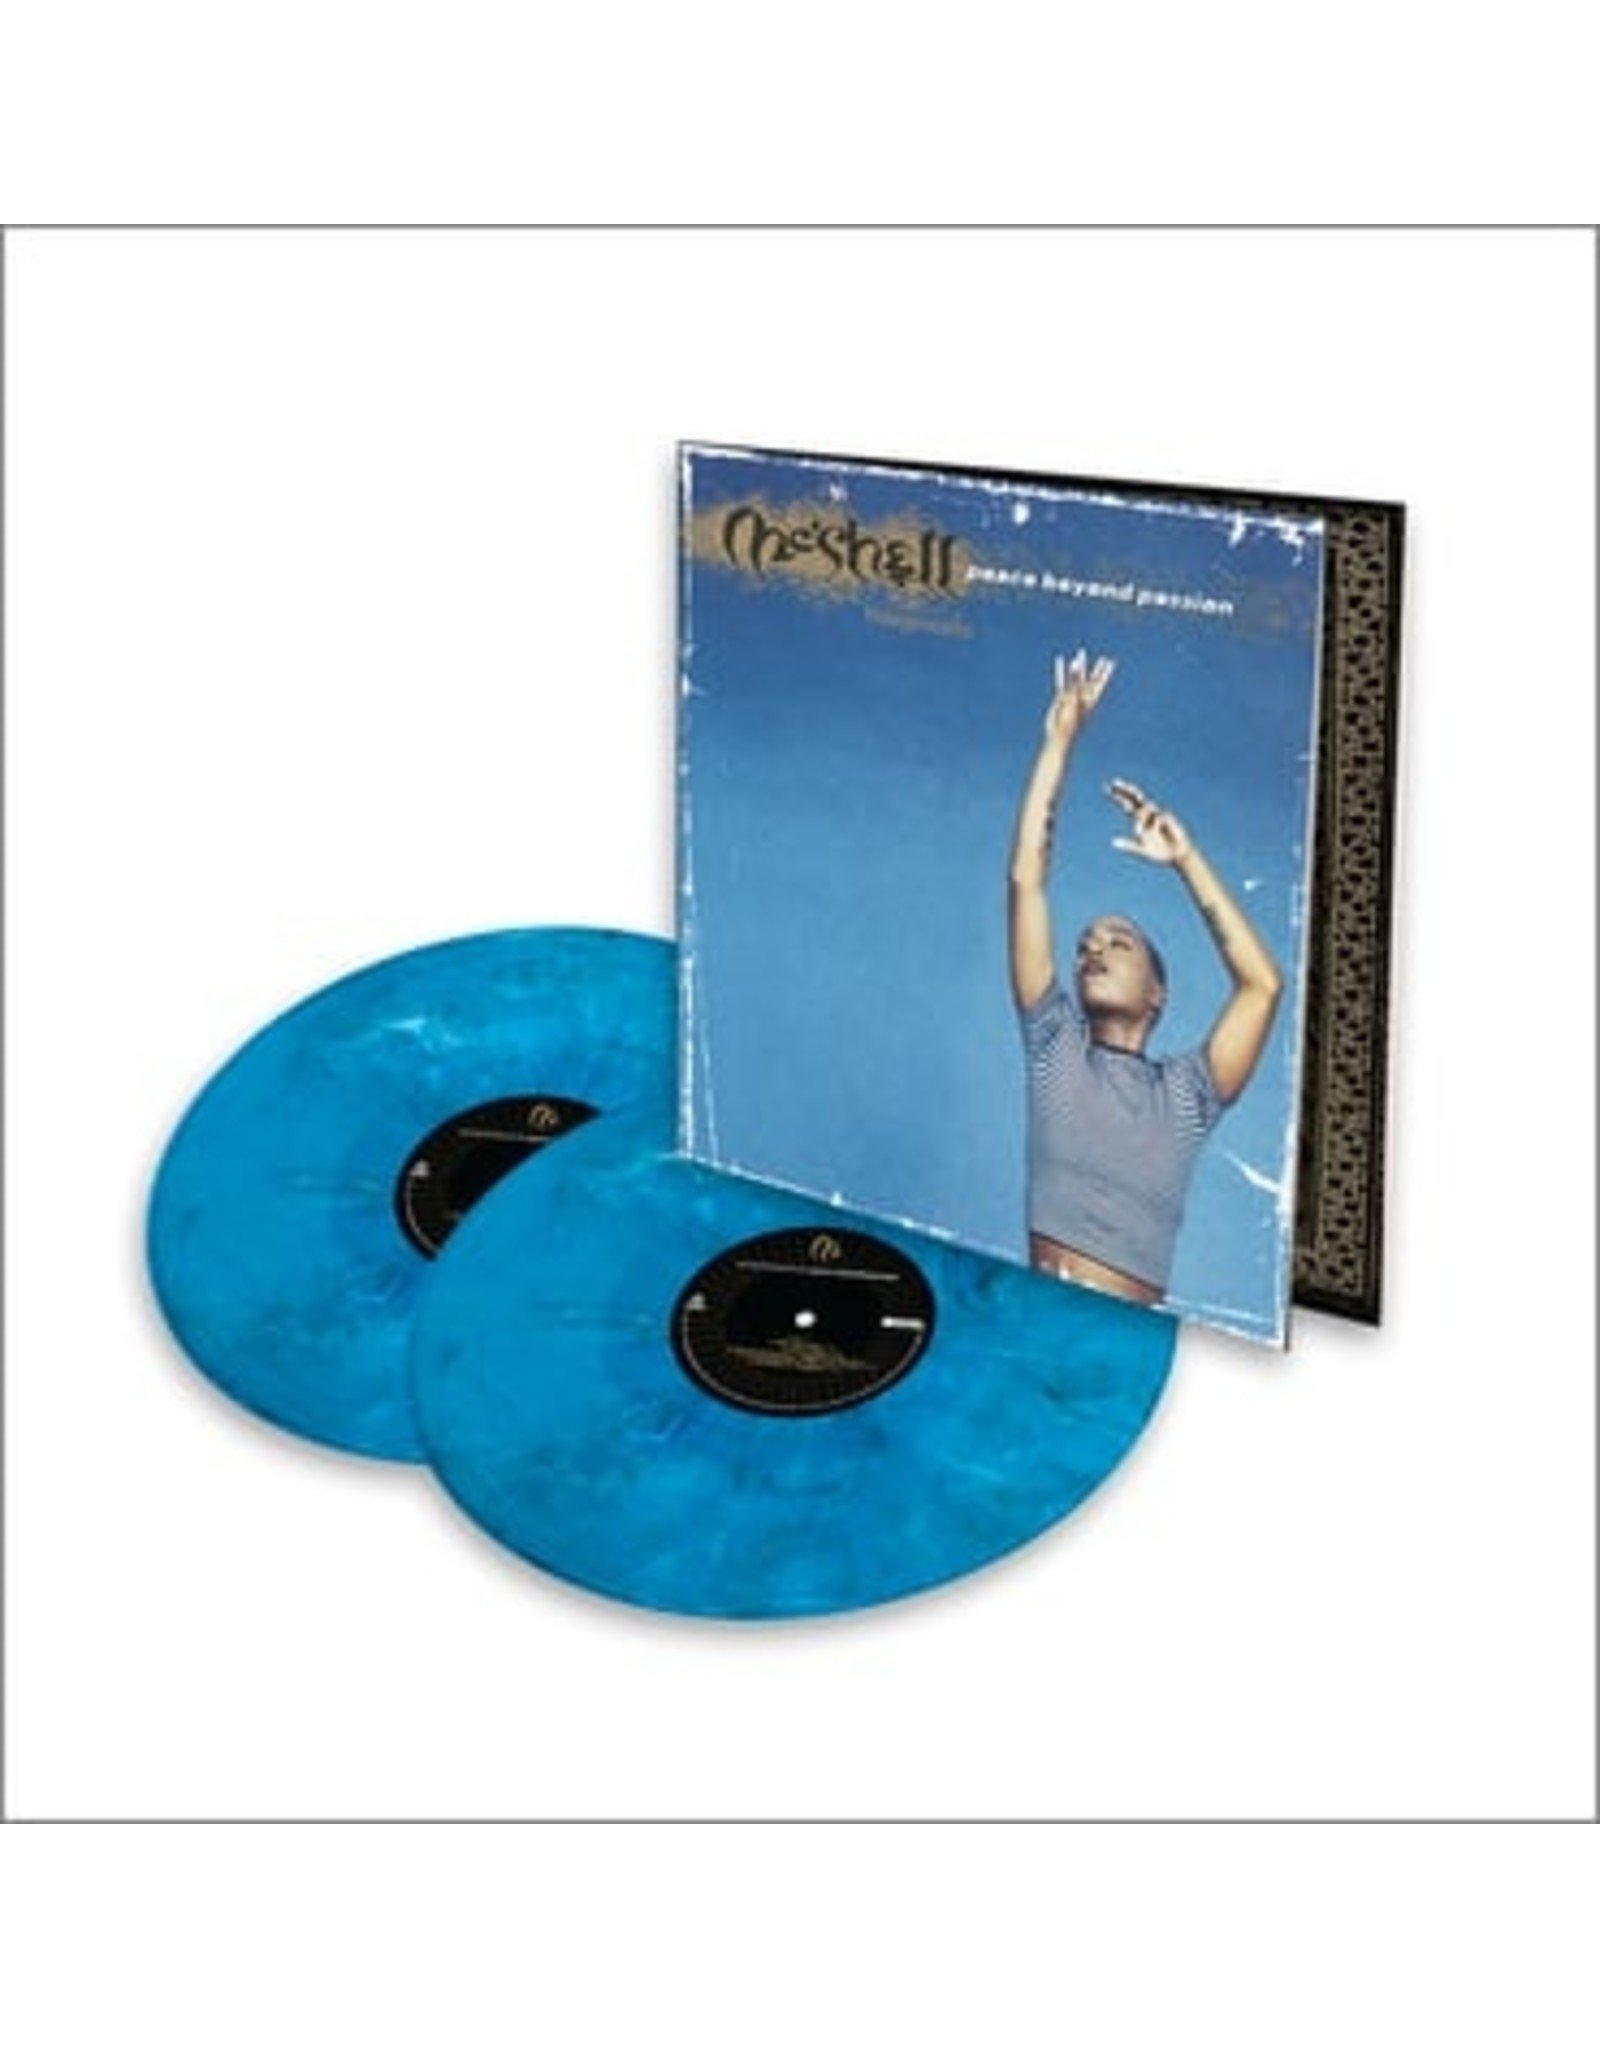 Me'Shell Ndegeocello - Peace Beyond Passion (25th) [Blue Vinyl